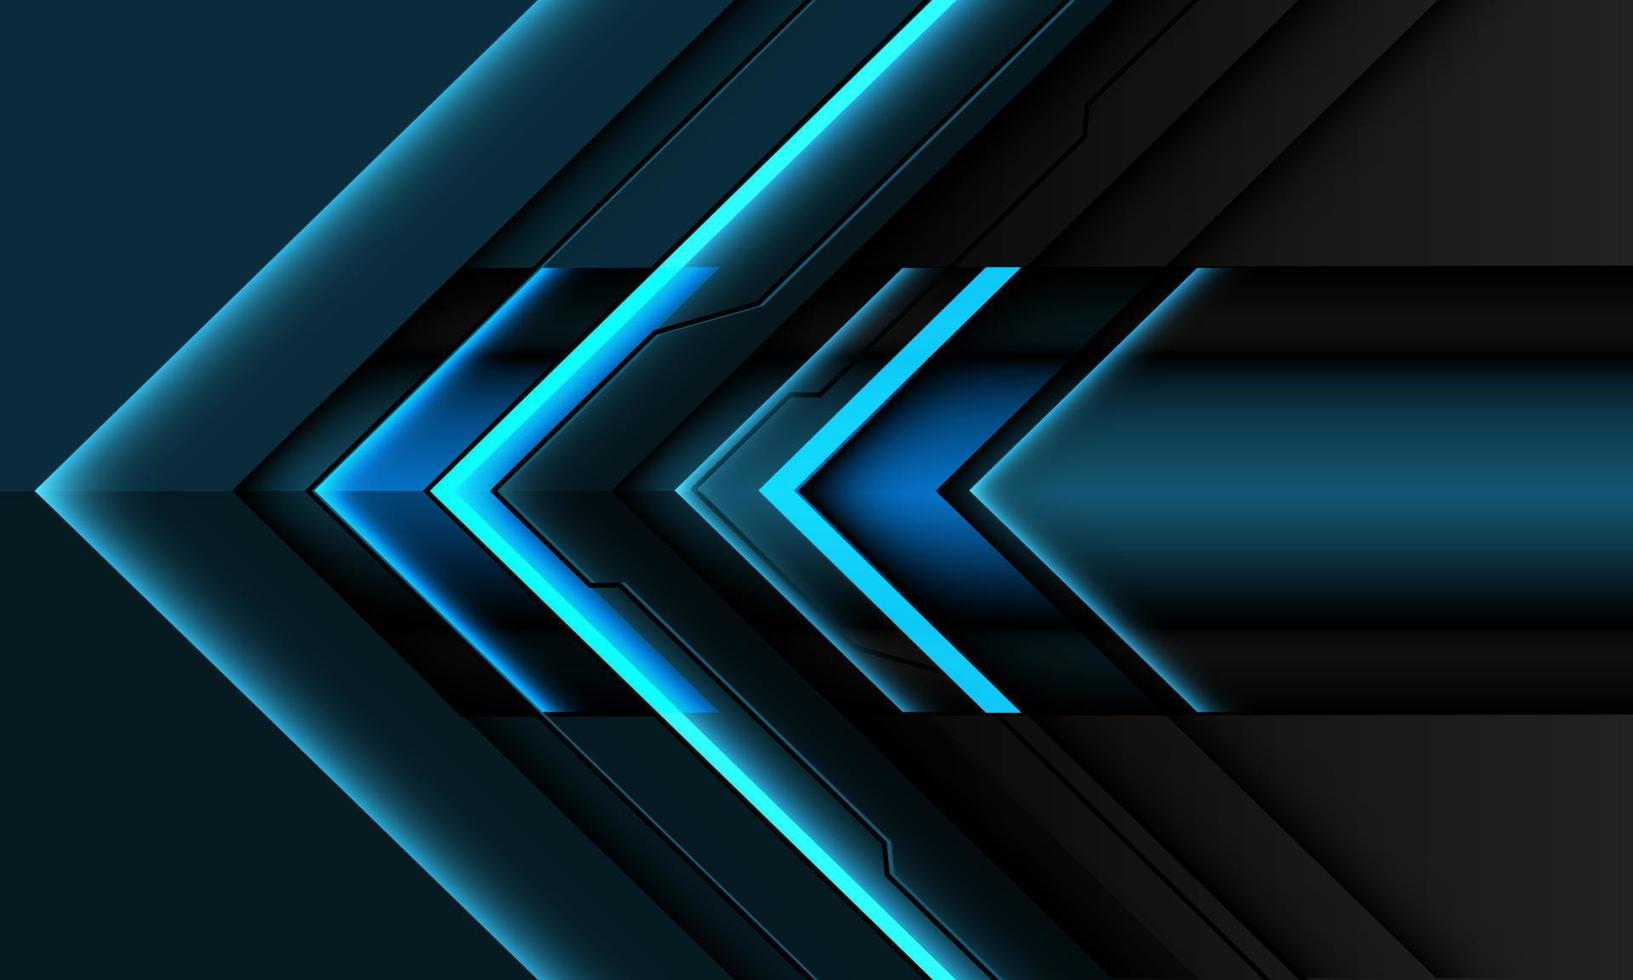 abstract blauw metalen pijl zwart lijn cyber richting ontwerp modern futuristische achtergrond vector